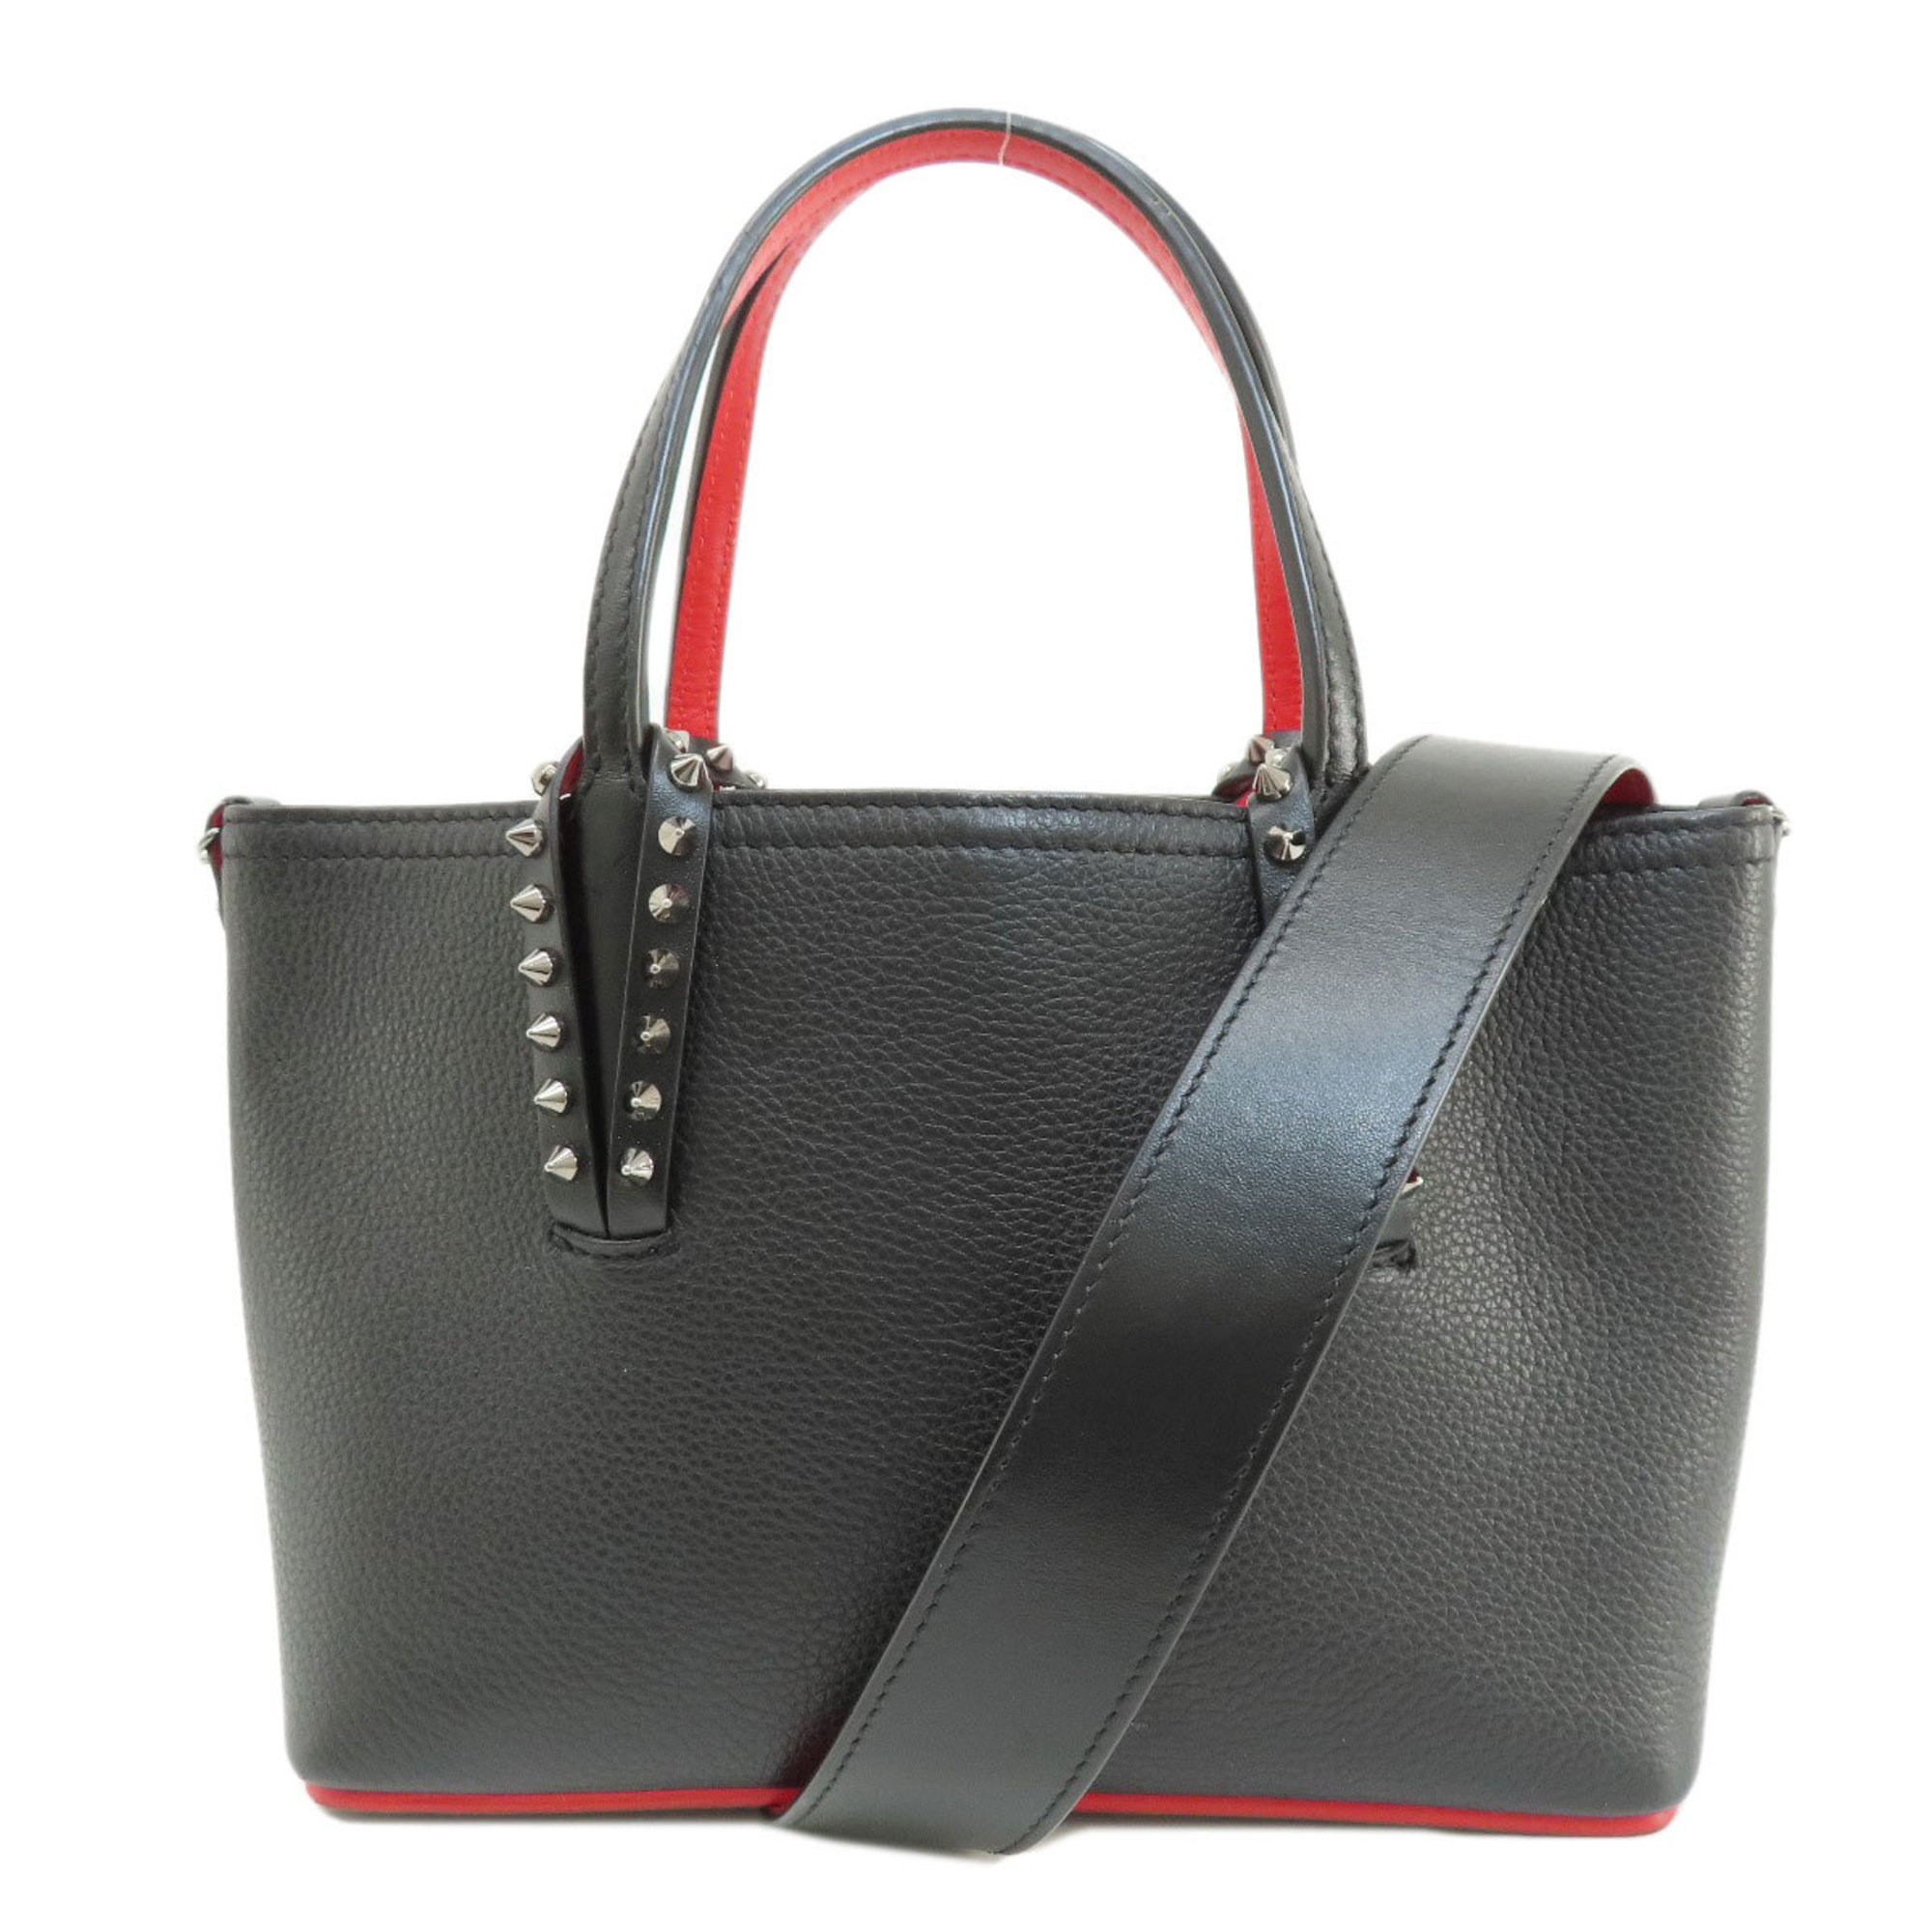 Christian Louboutin Studded Handbag Leather Women's